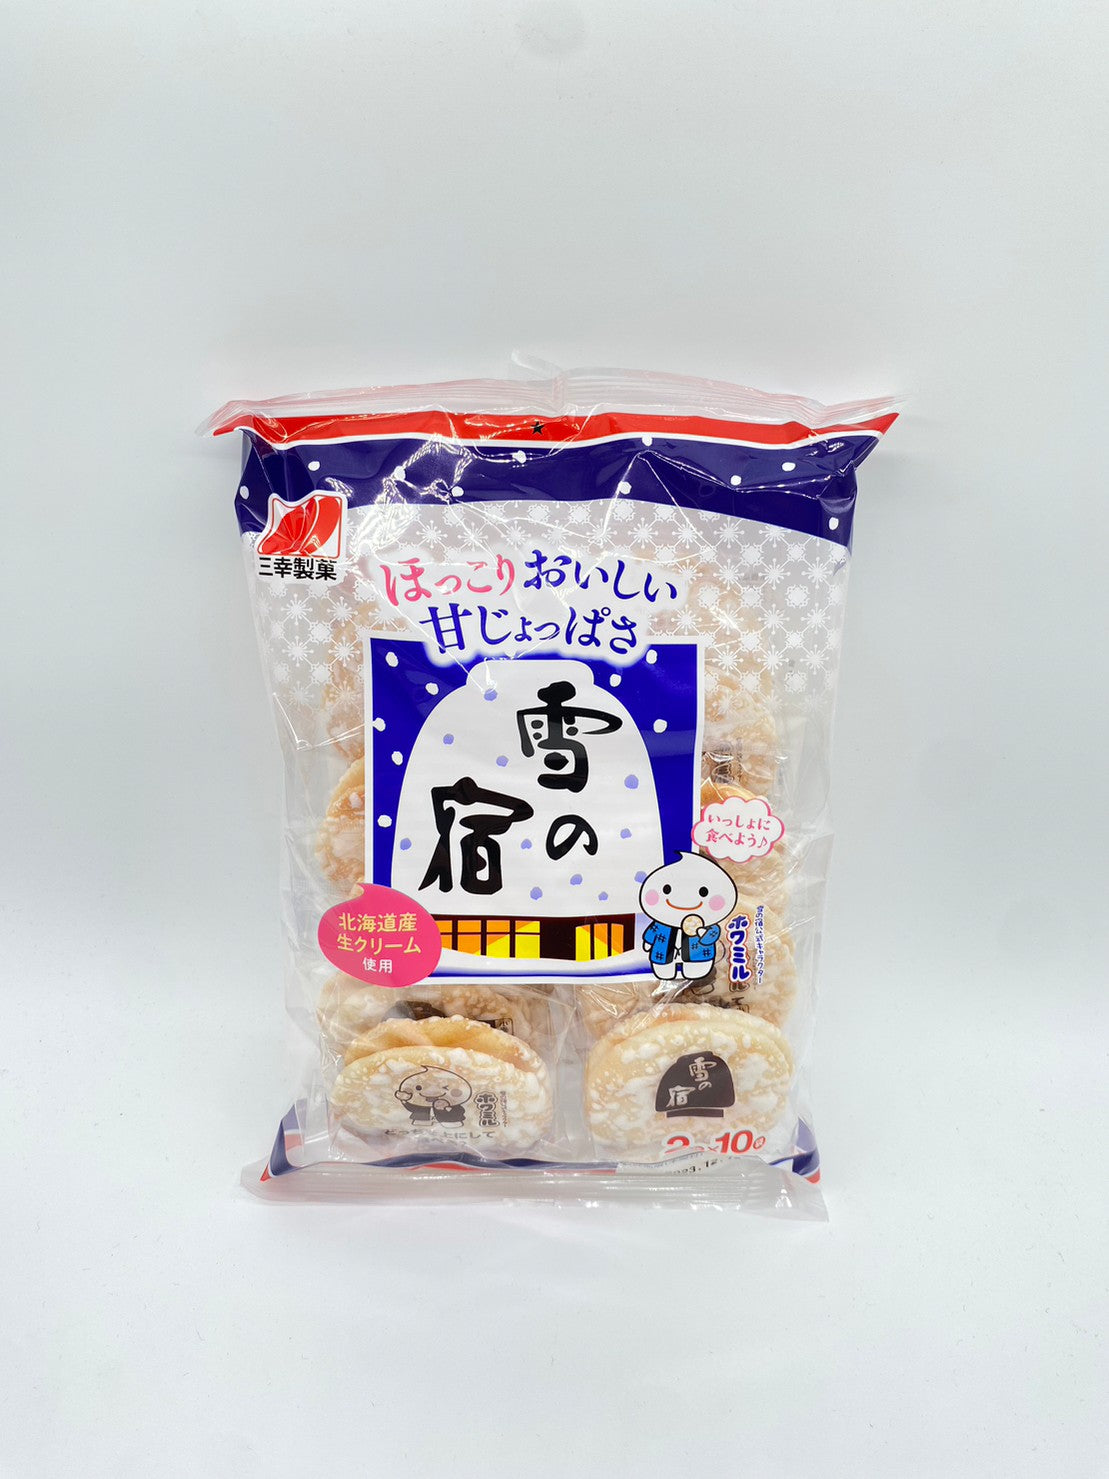 Yuki no Yado: Rice Cracker (Salty&Sweet) - Sanko Seika